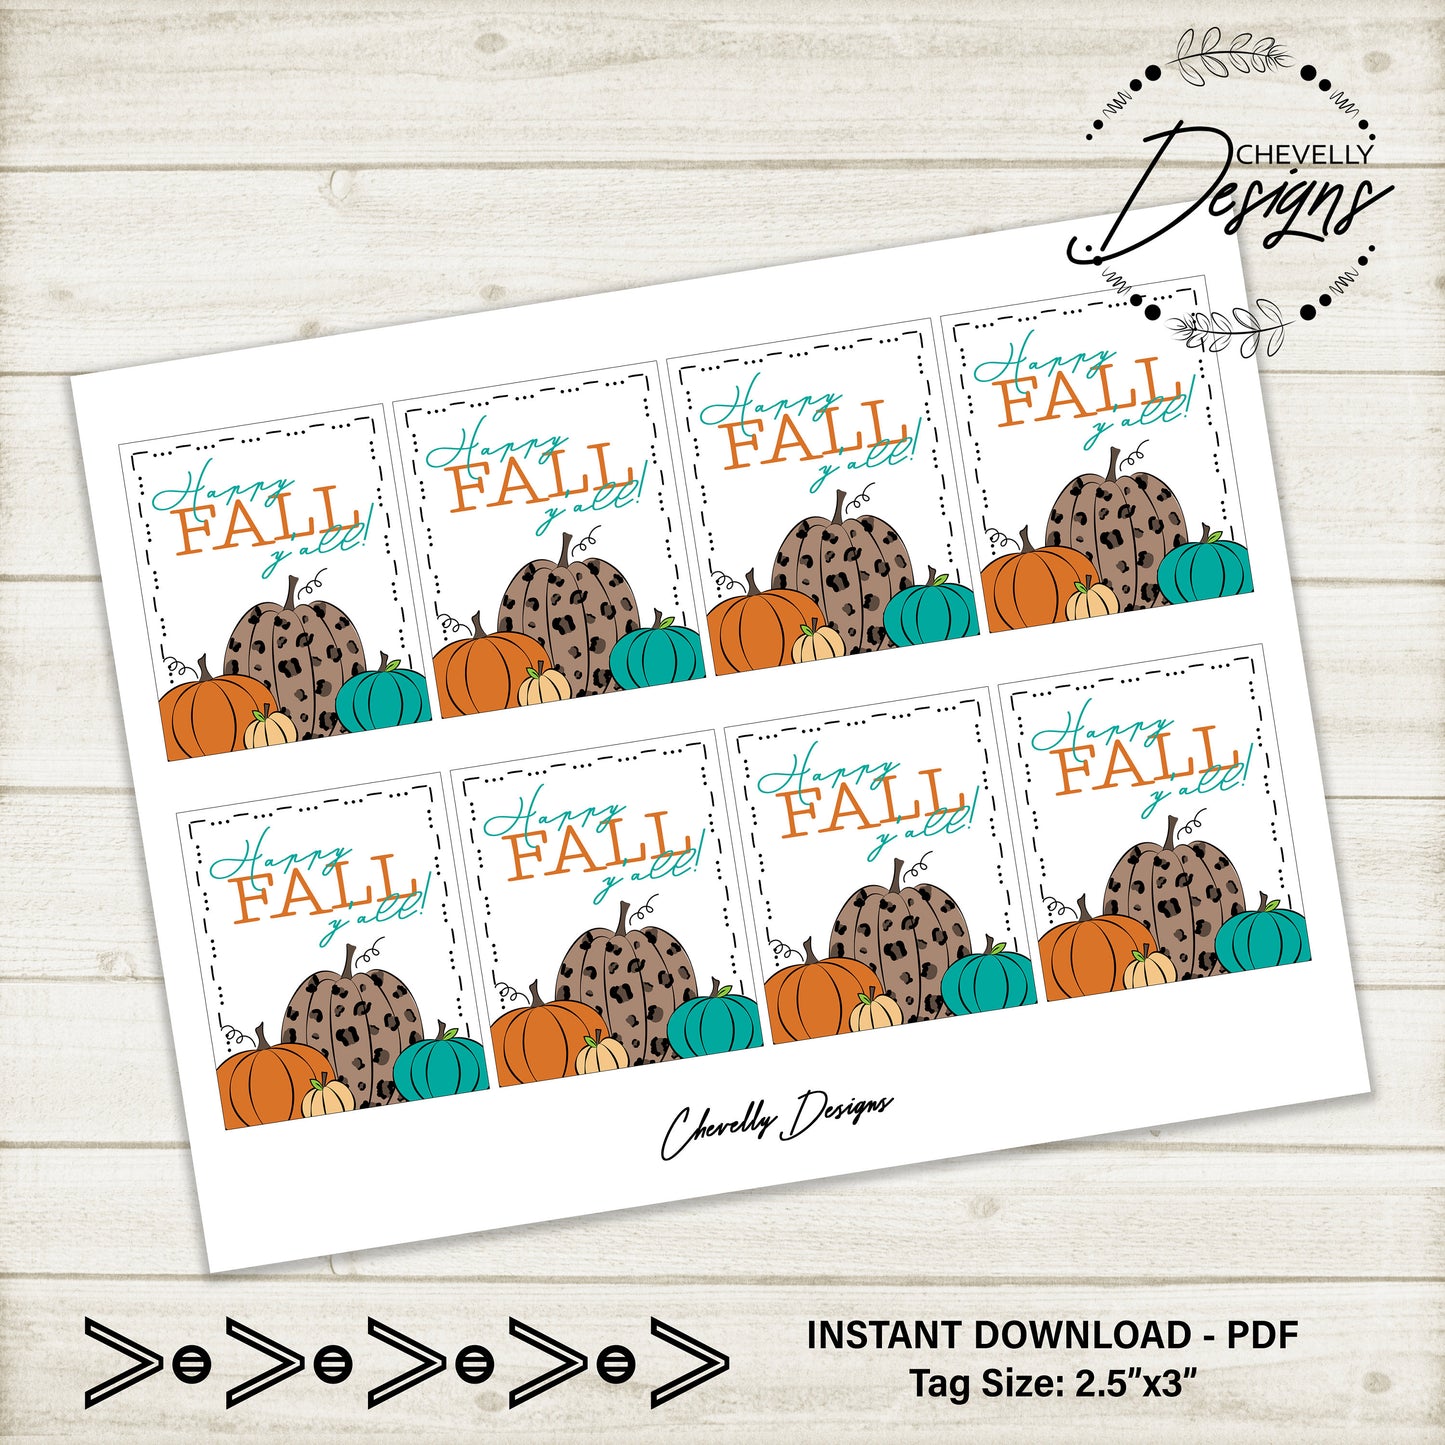 Pumpkin Gift Tags - Happy Fall Yall Pumpkins >>>Instant Digital Download<<<